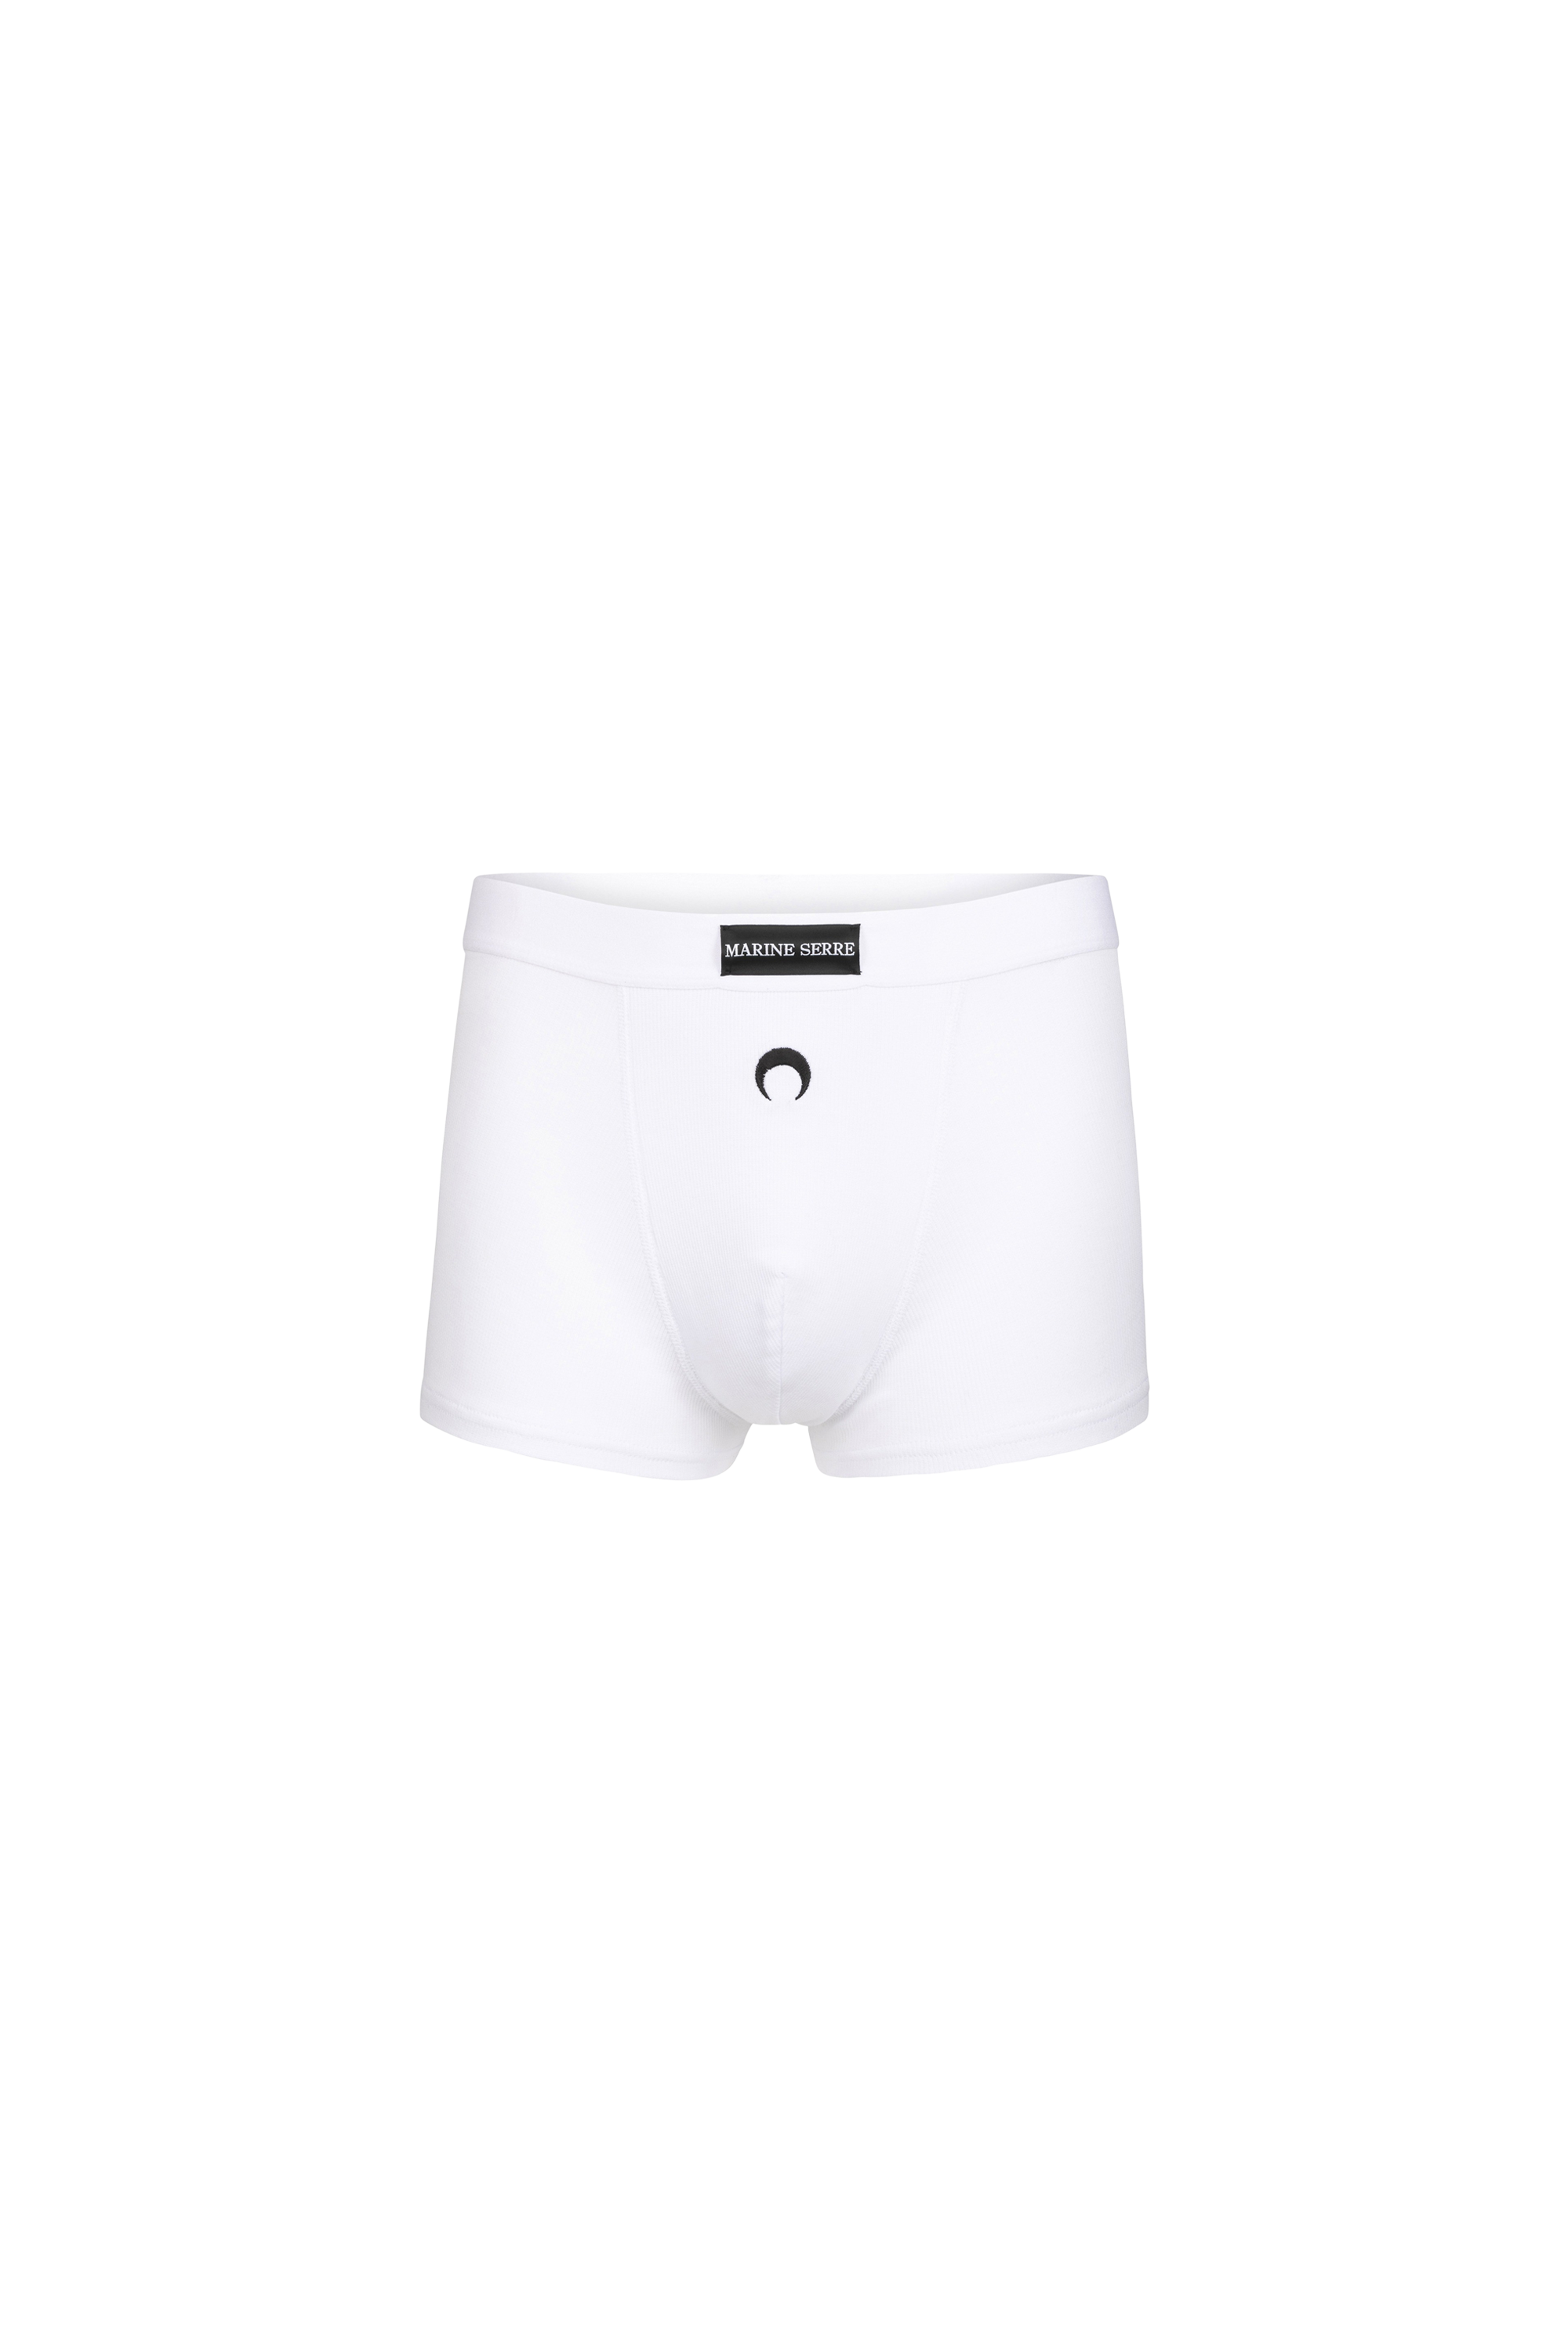 Mariner JEAN LOUIS Marine - Free delivery  Spartoo UK ! - Underwear  Underpants / Brief Men £ 16.99